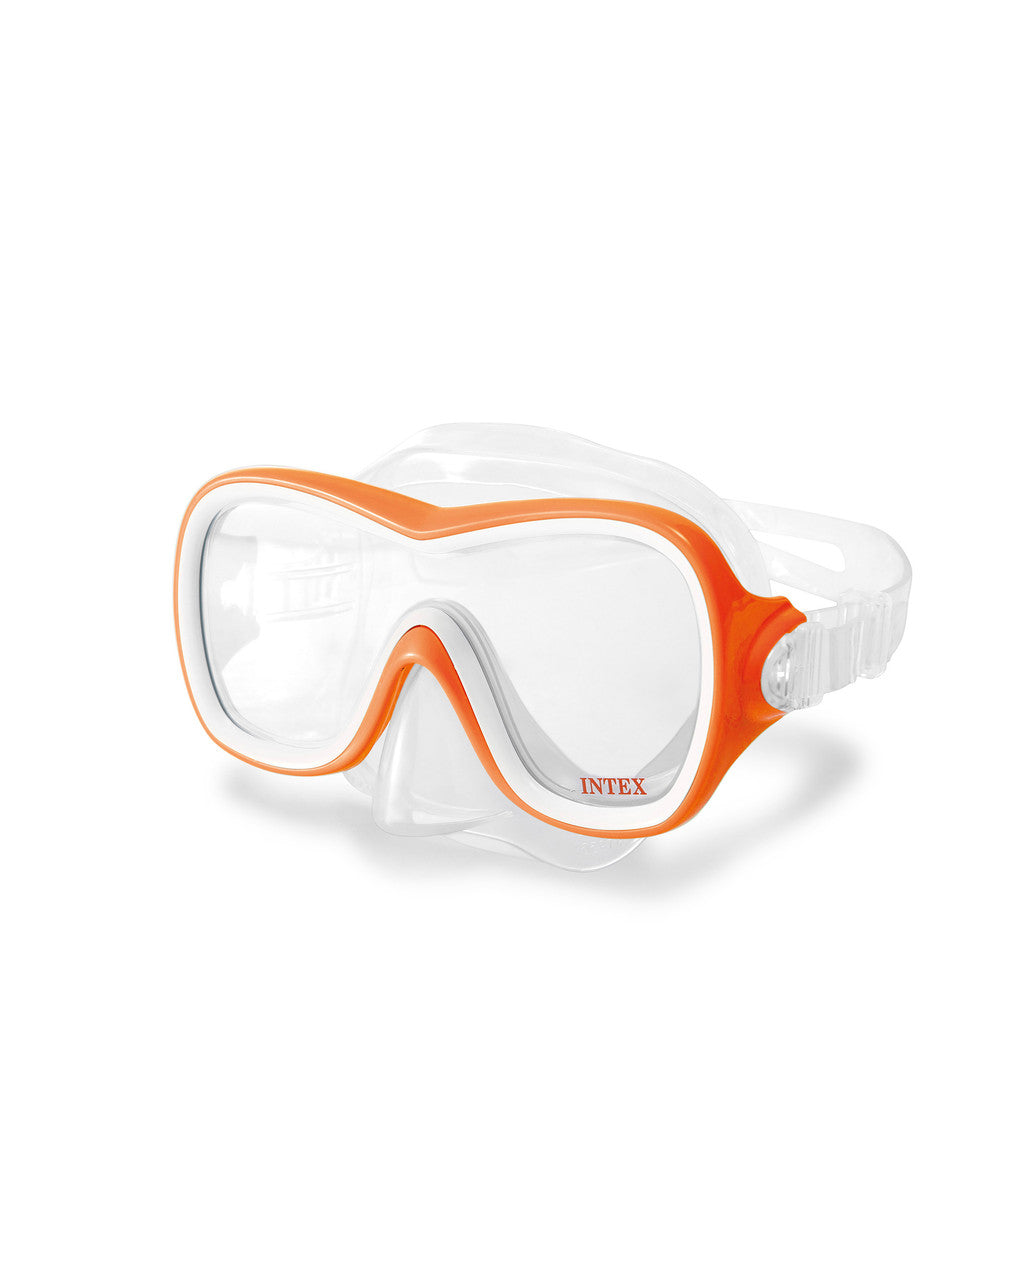 Intex Wave Rider Swim Masks - Assortment